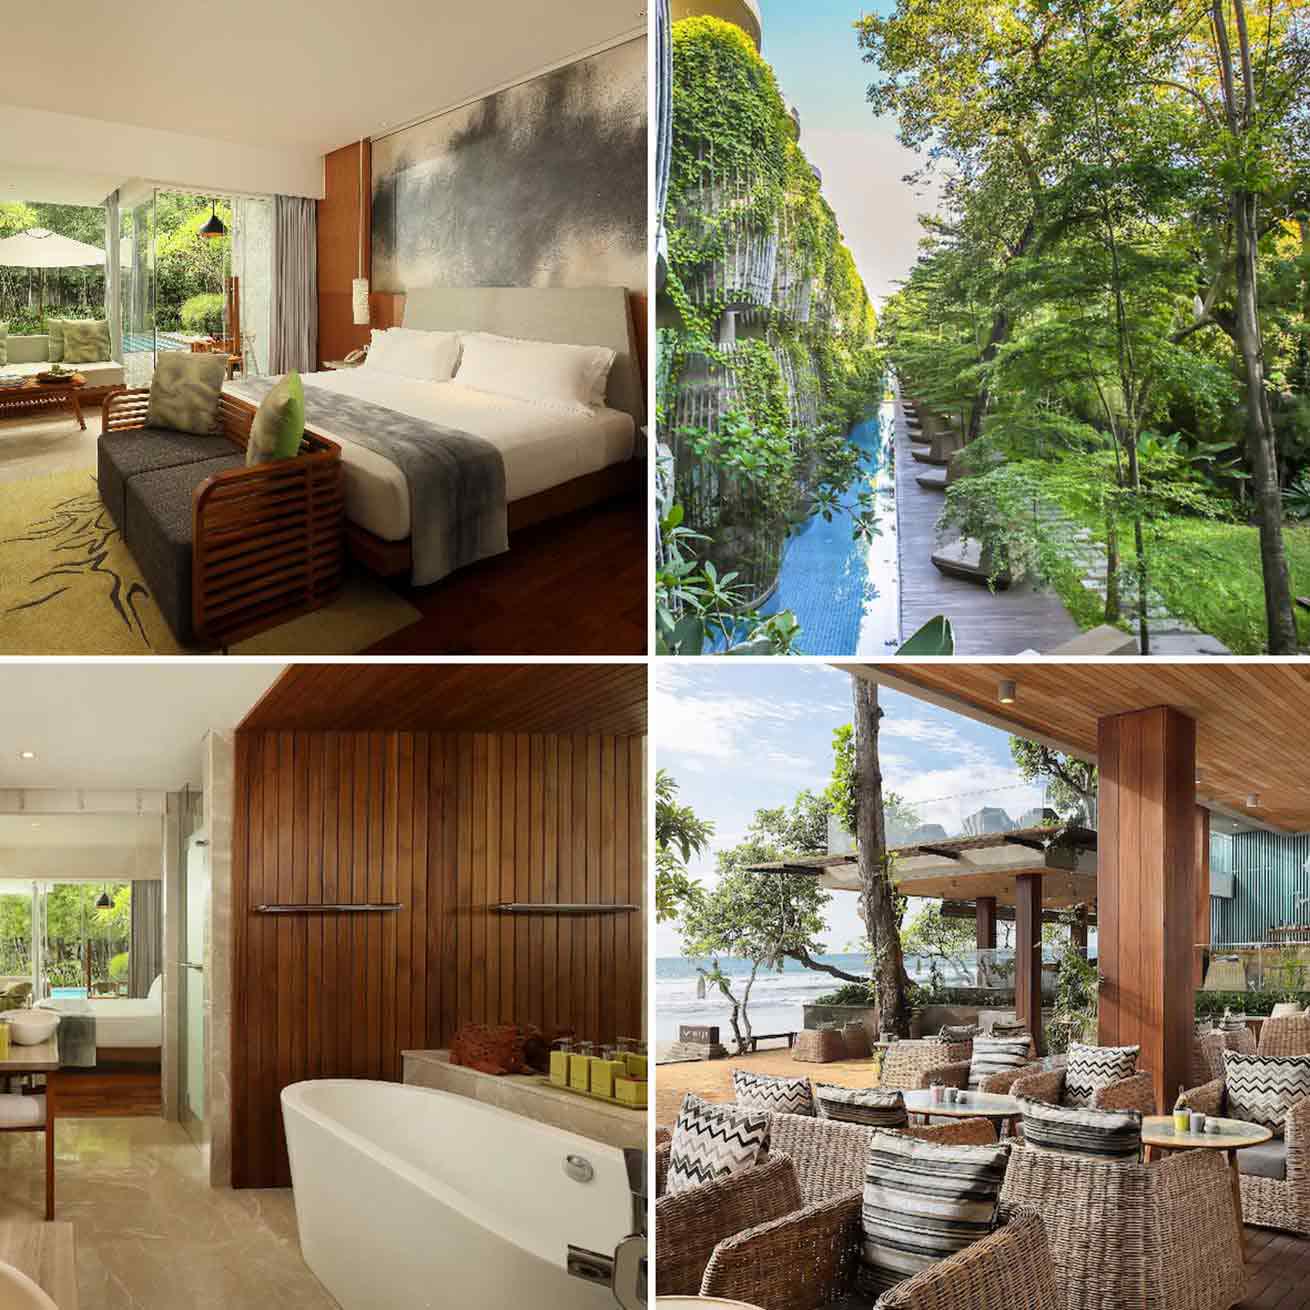 The interior with elegant furniture and outdoor garden in Maya Sanur